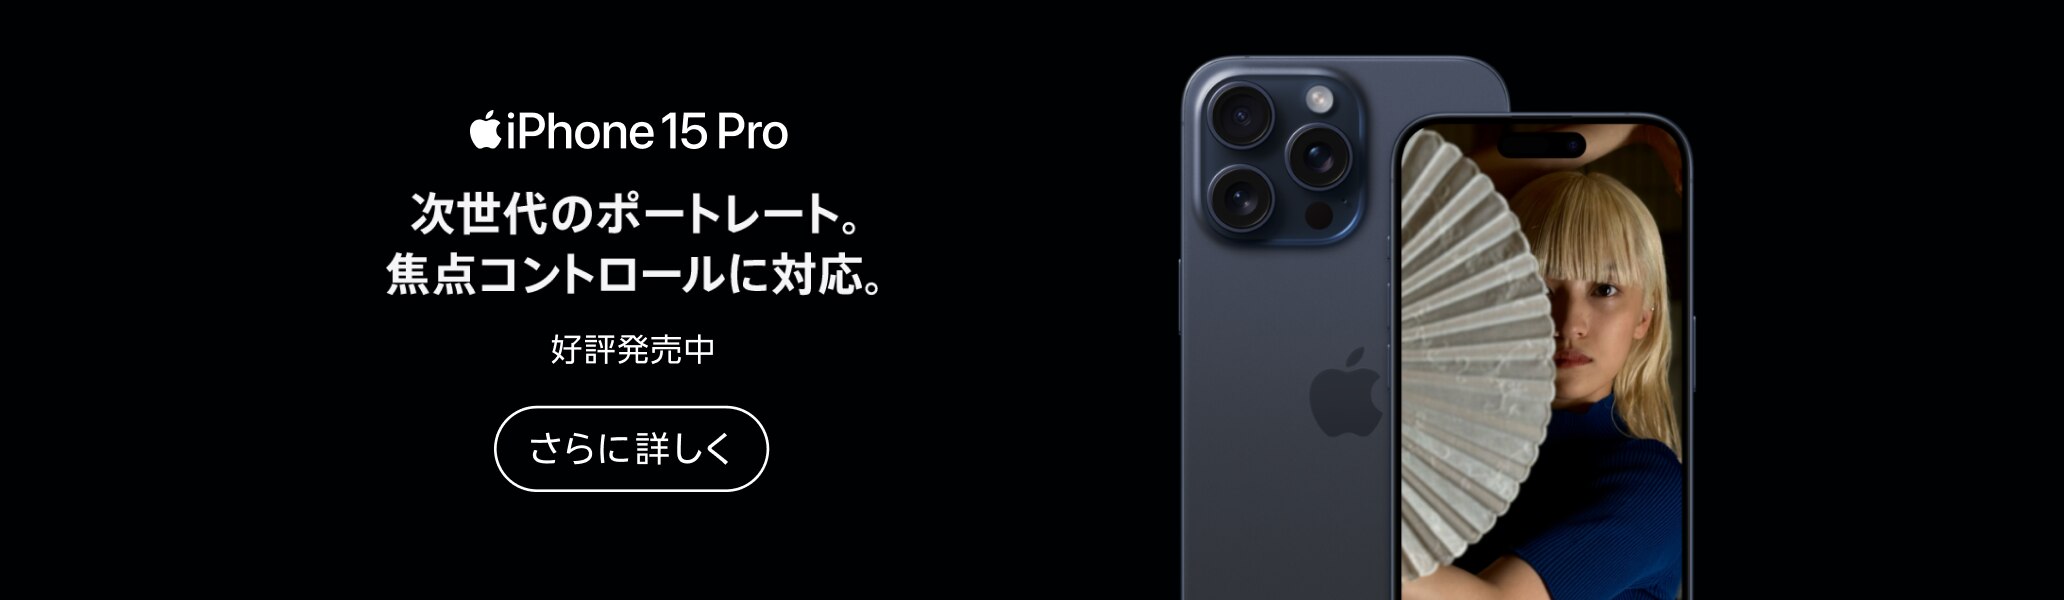 iPhone 15 Pro 次世代のポートレート。焦点コントロールに対応。